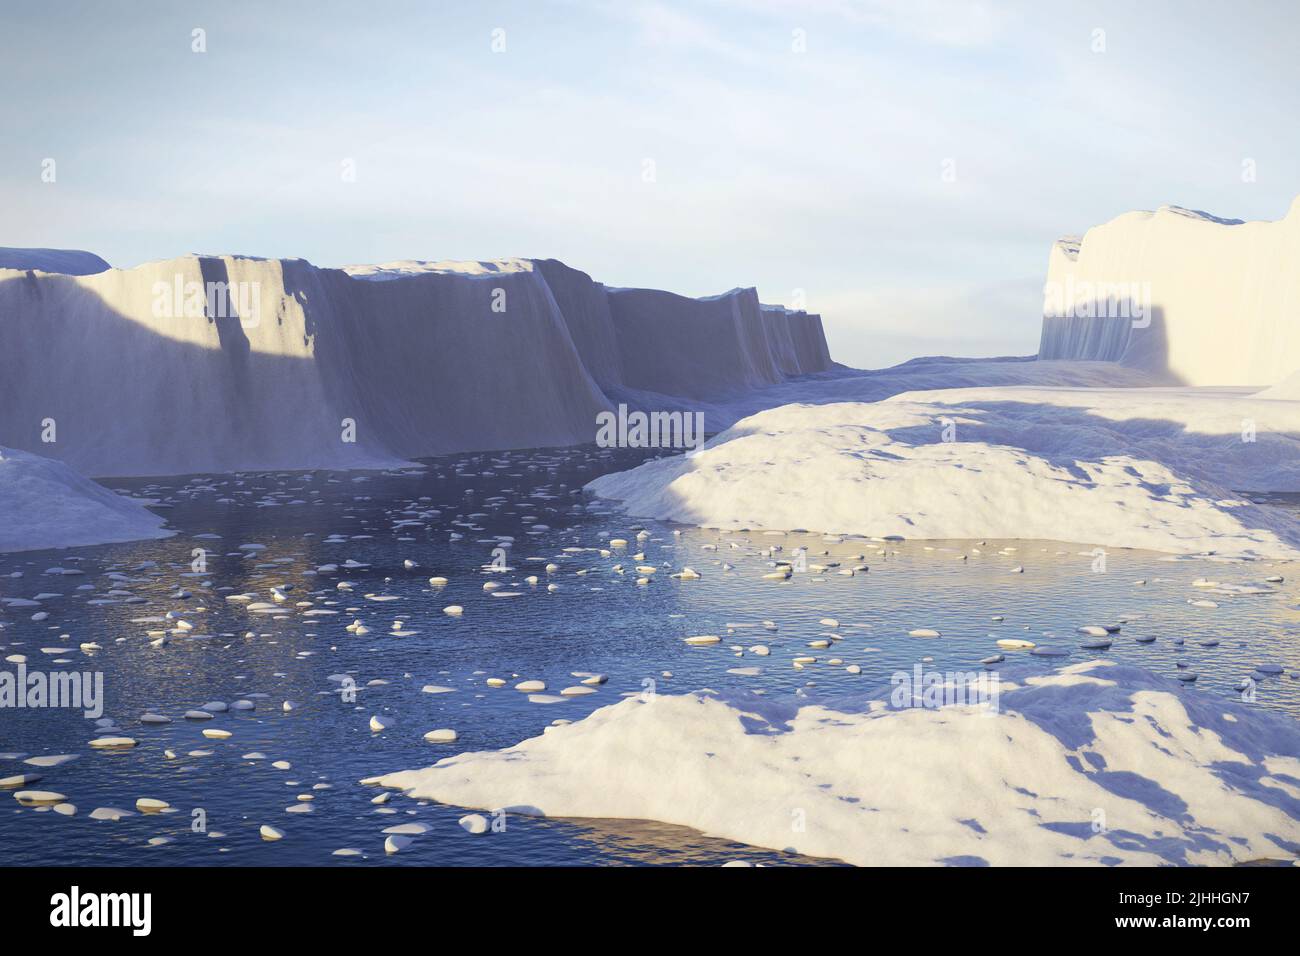 frozen arctic sea with icebergs and brash ice Stock Photo